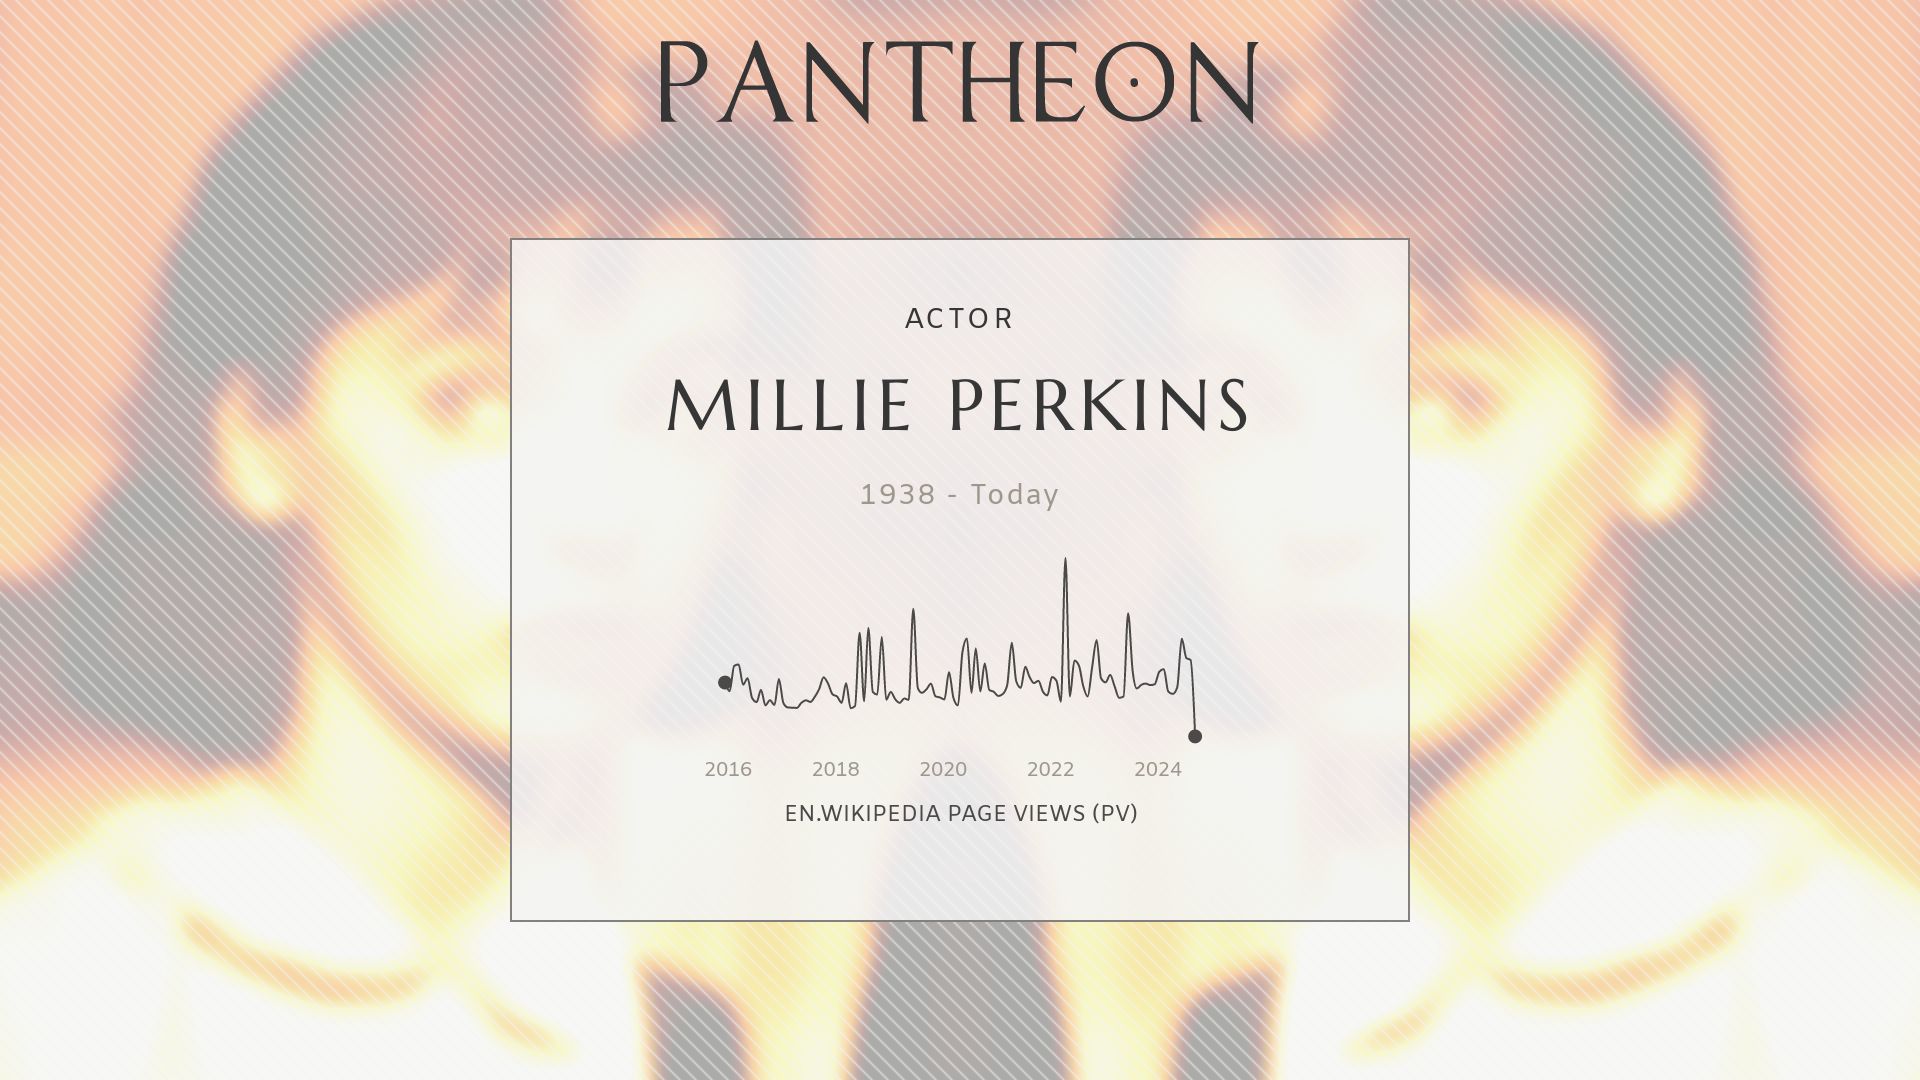 Millie perkins 2019